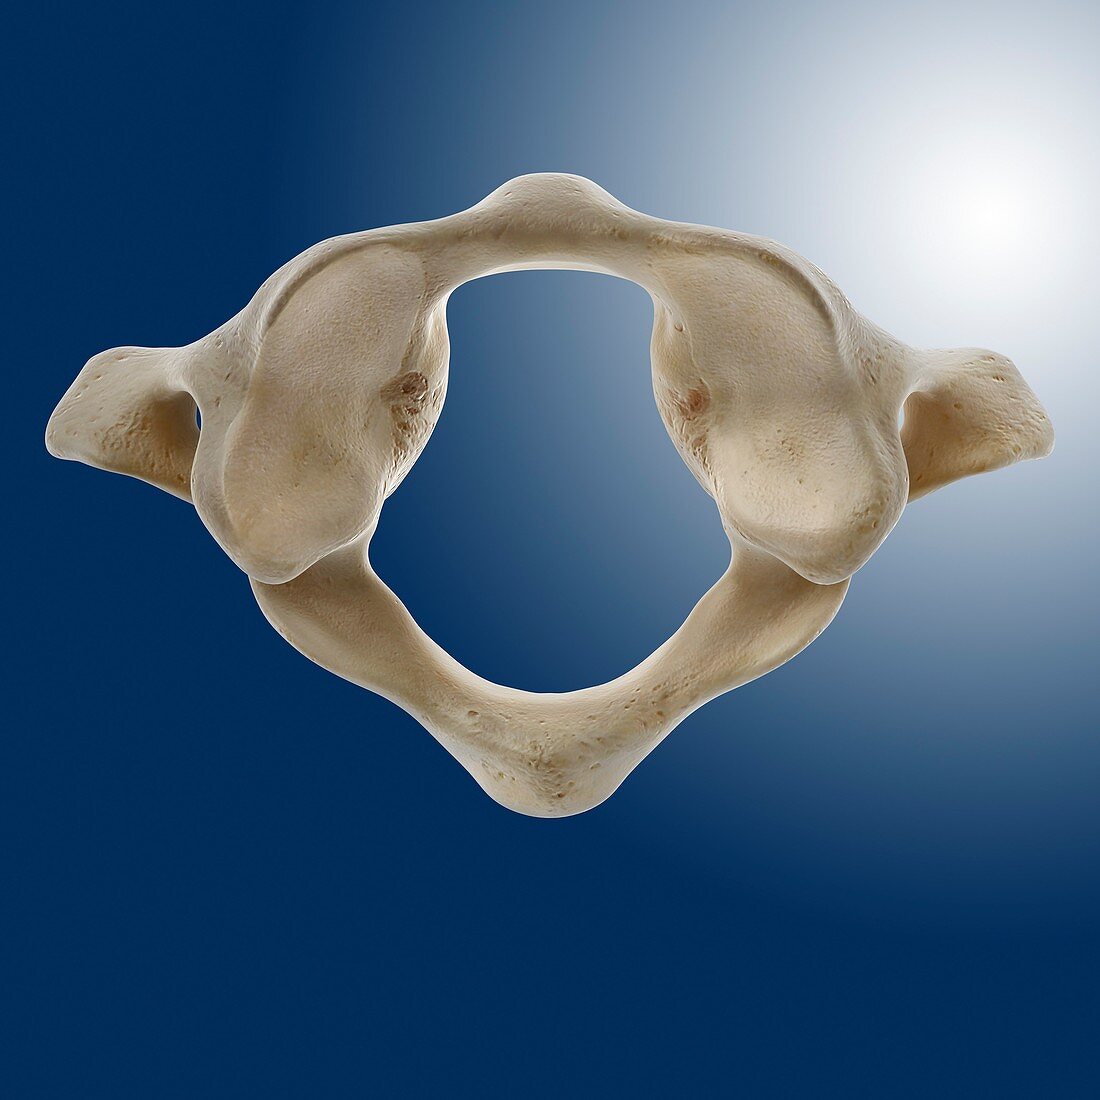 Atlas vertebra (C1),artwork